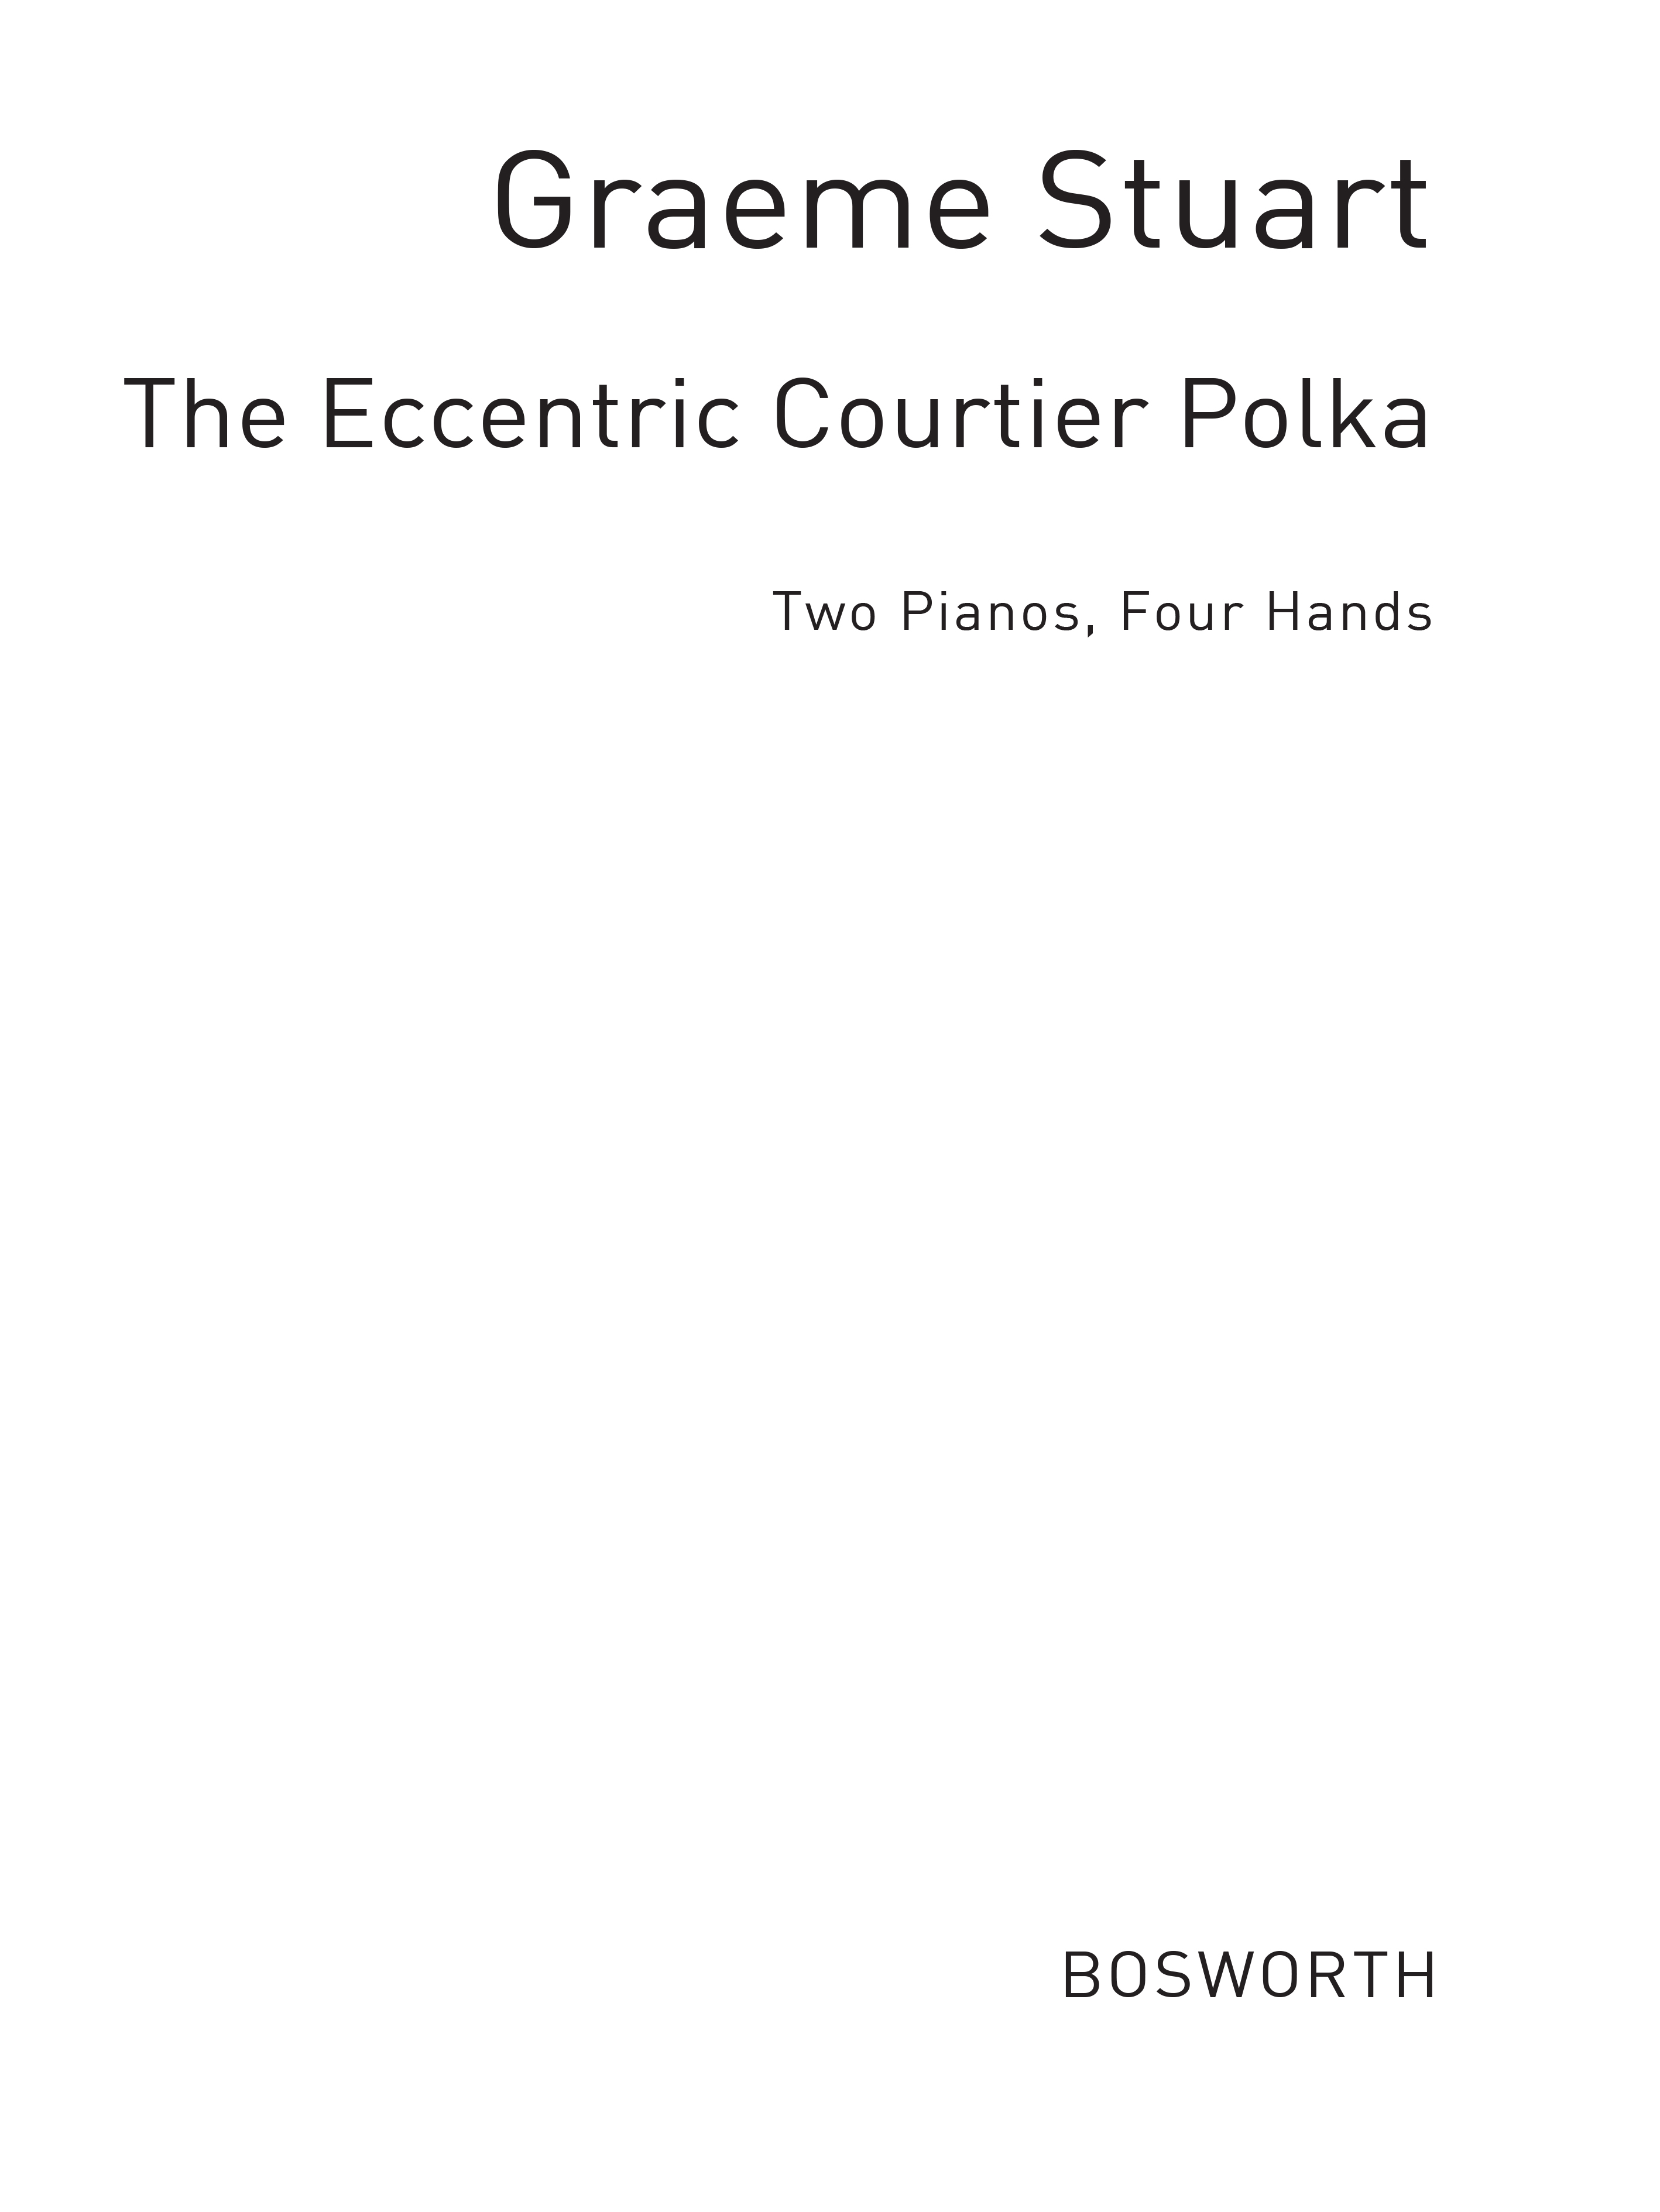 Stuart, G The Eccentric Courtier Polka 2pf 4hnds